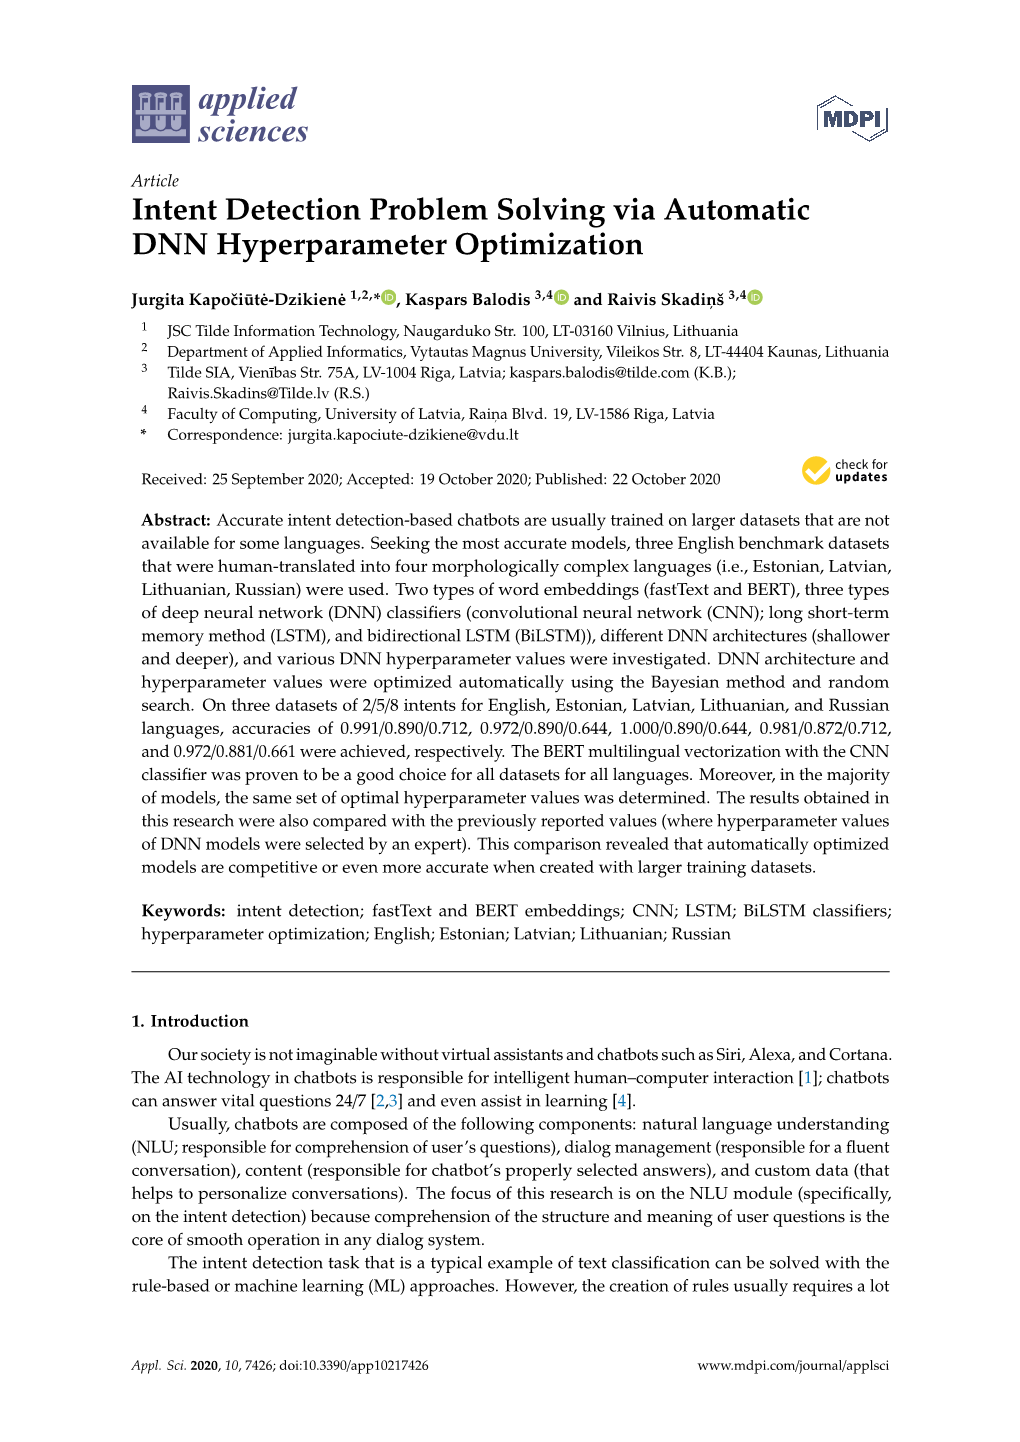 Intent Detection Problem Solving Via Automatic DNN Hyperparameter Optimization